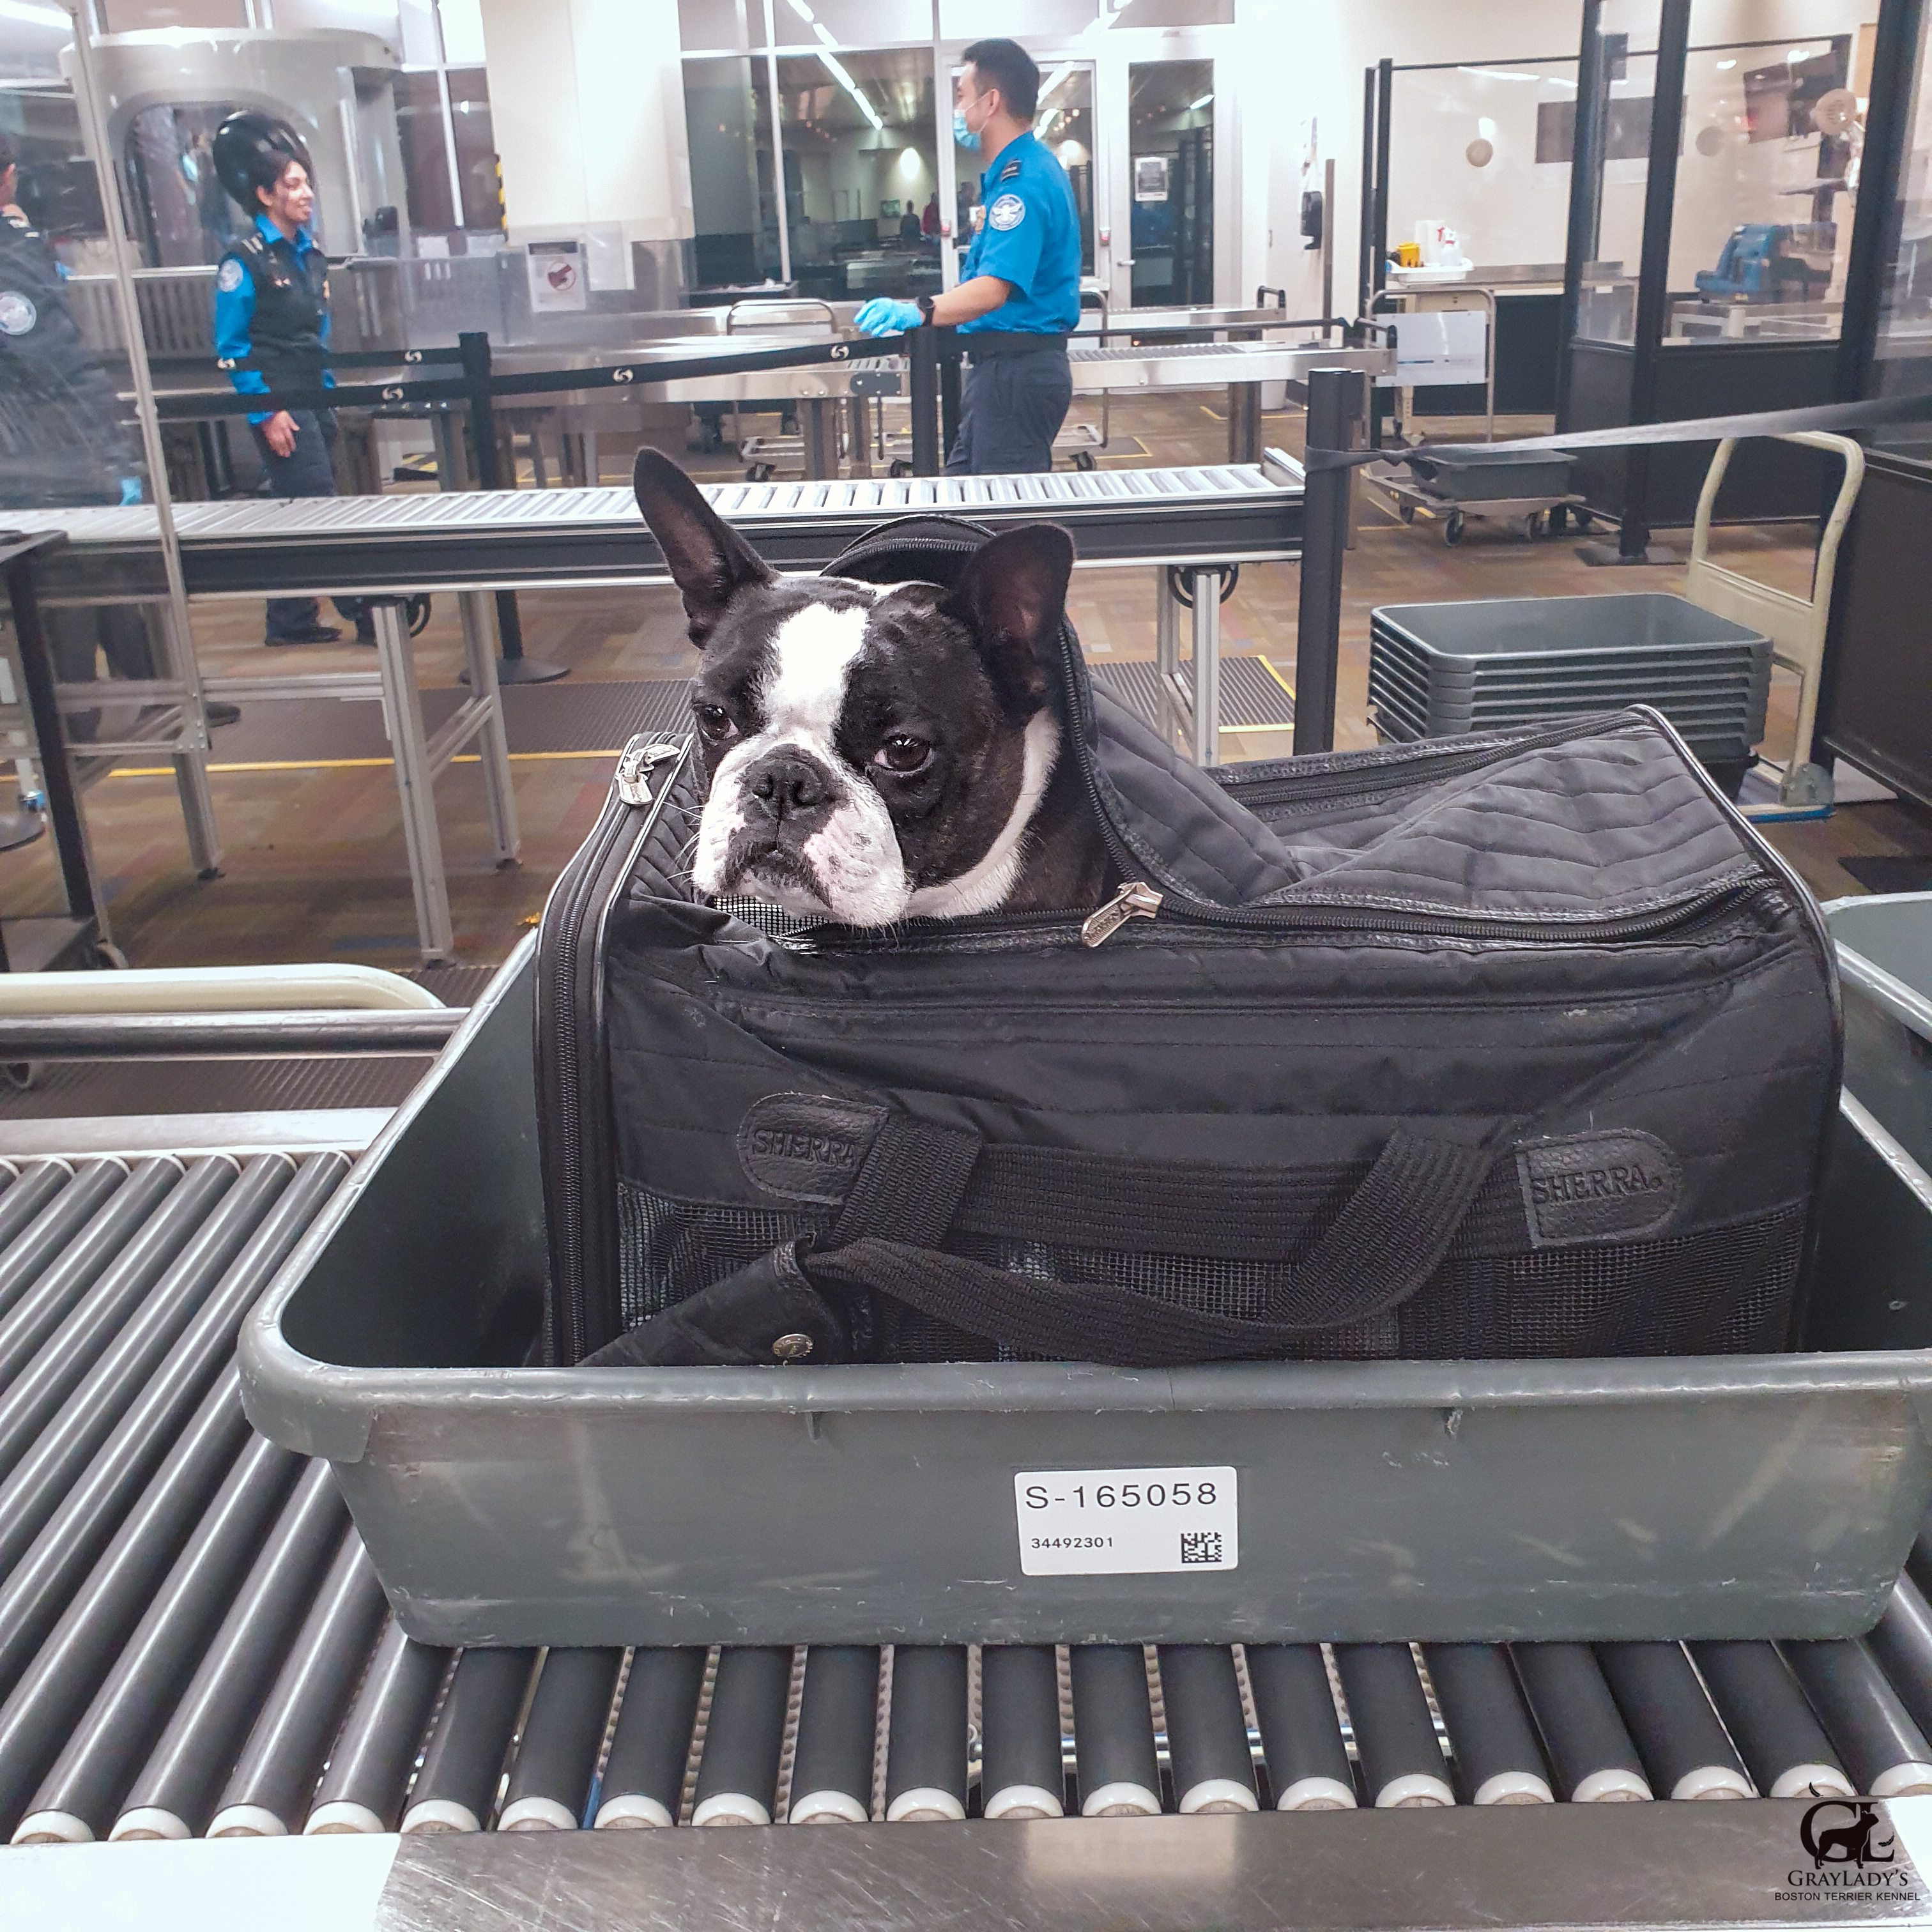 Ginny and the TSA in Miami International Airport